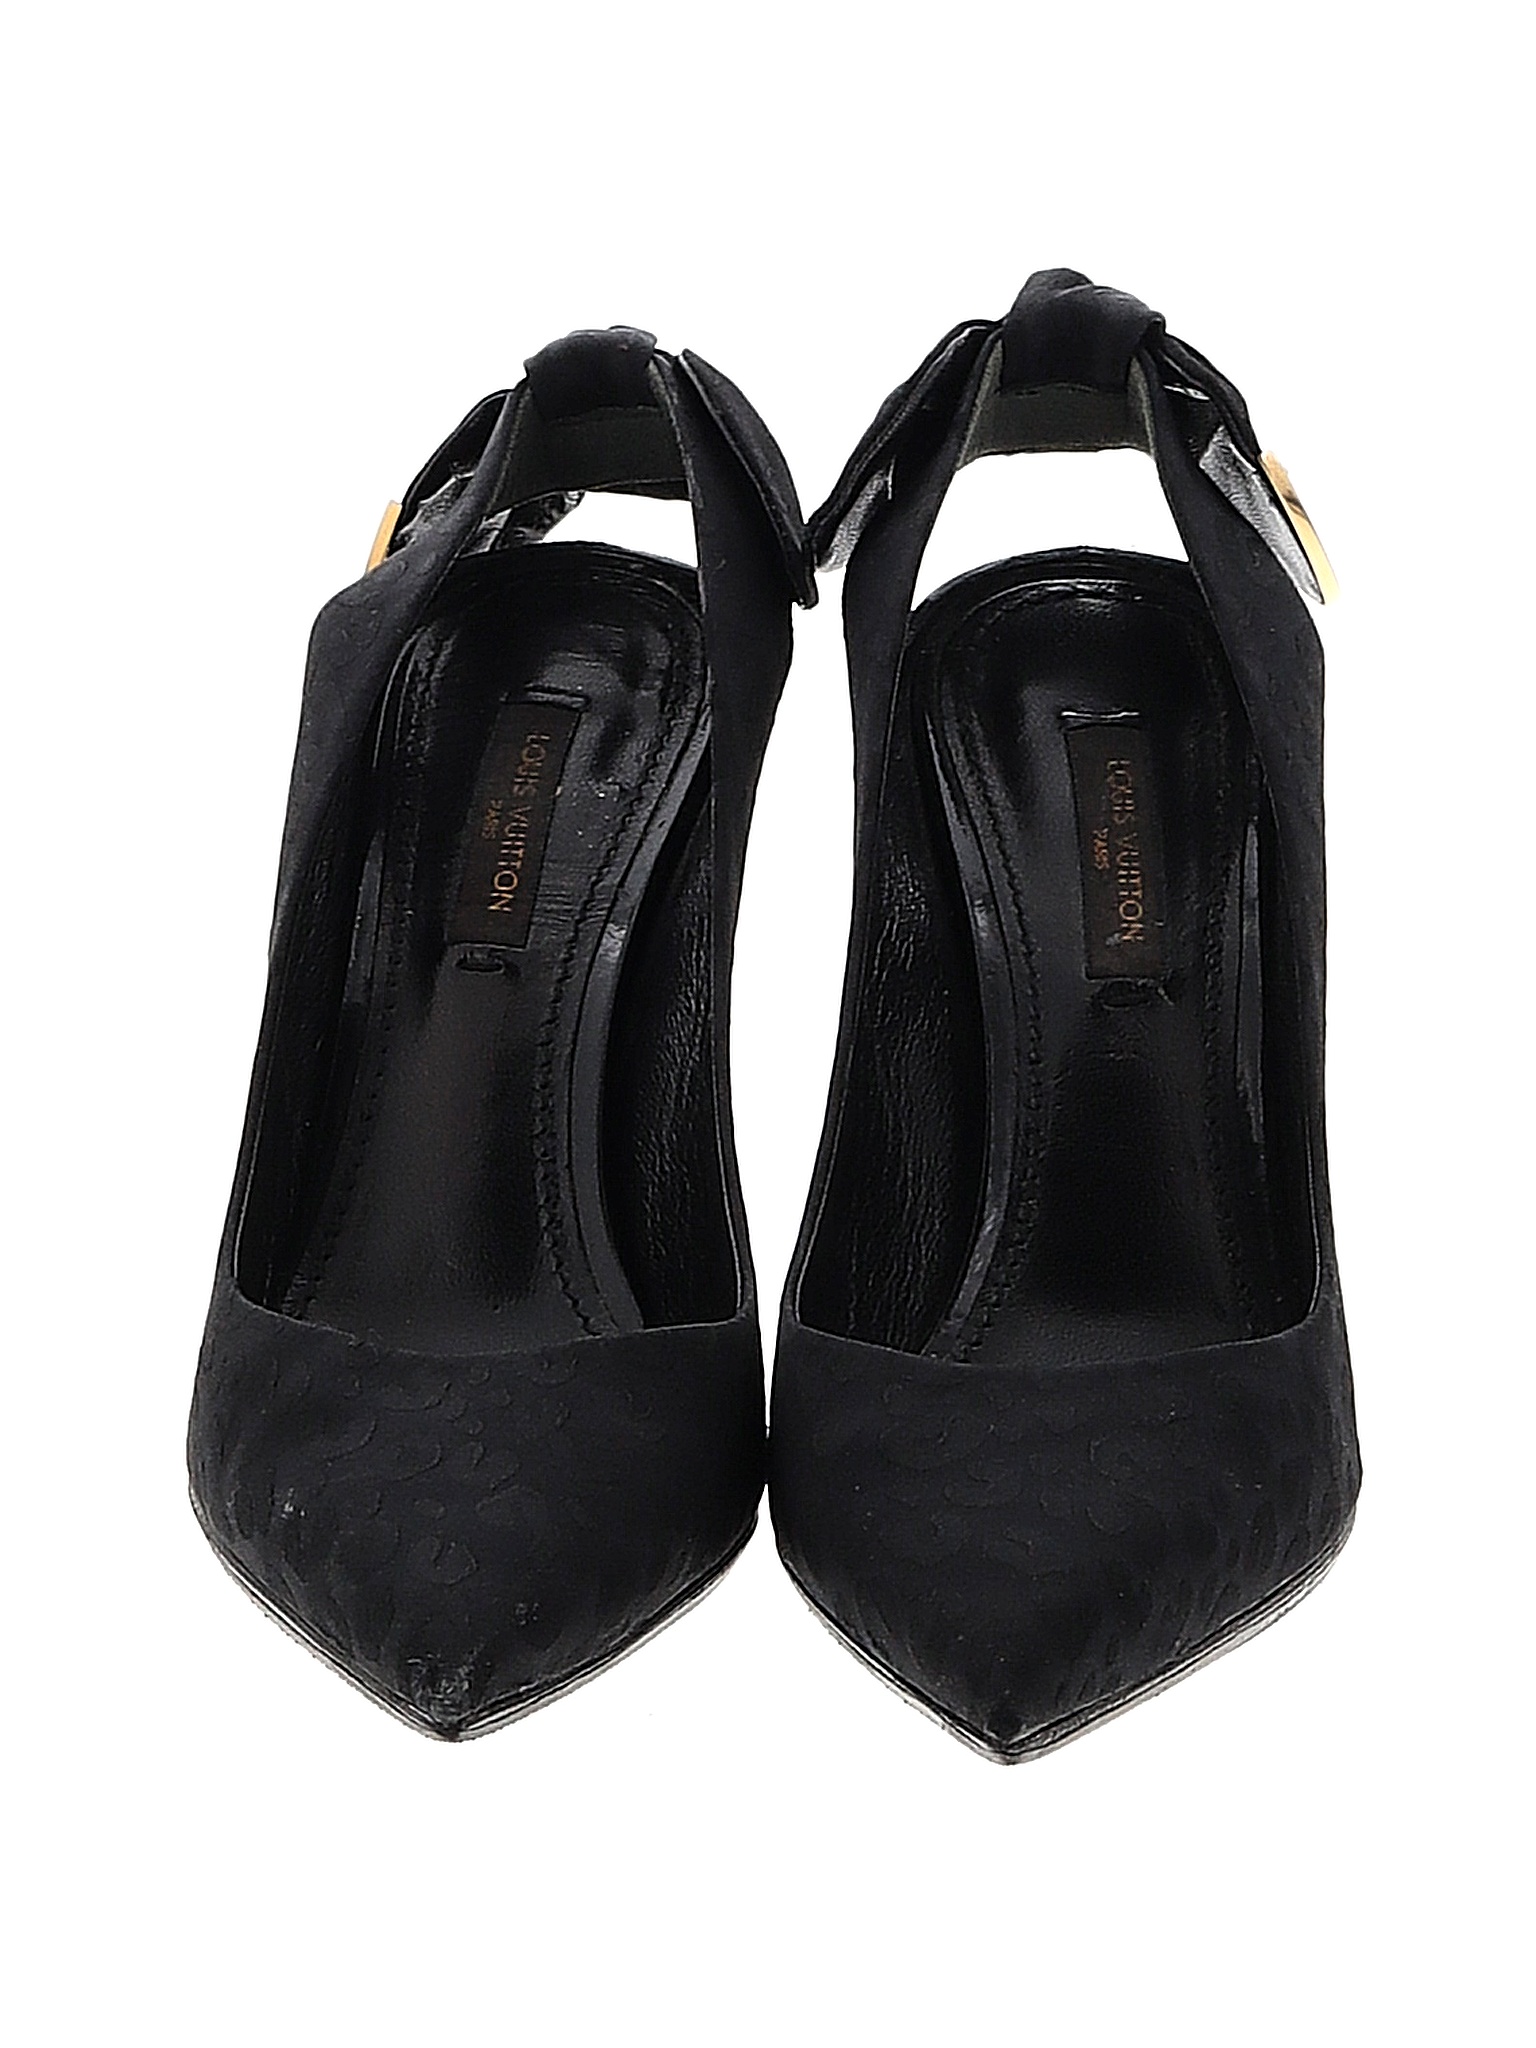 109USD (free shipping) LV women's shoes code: S111056